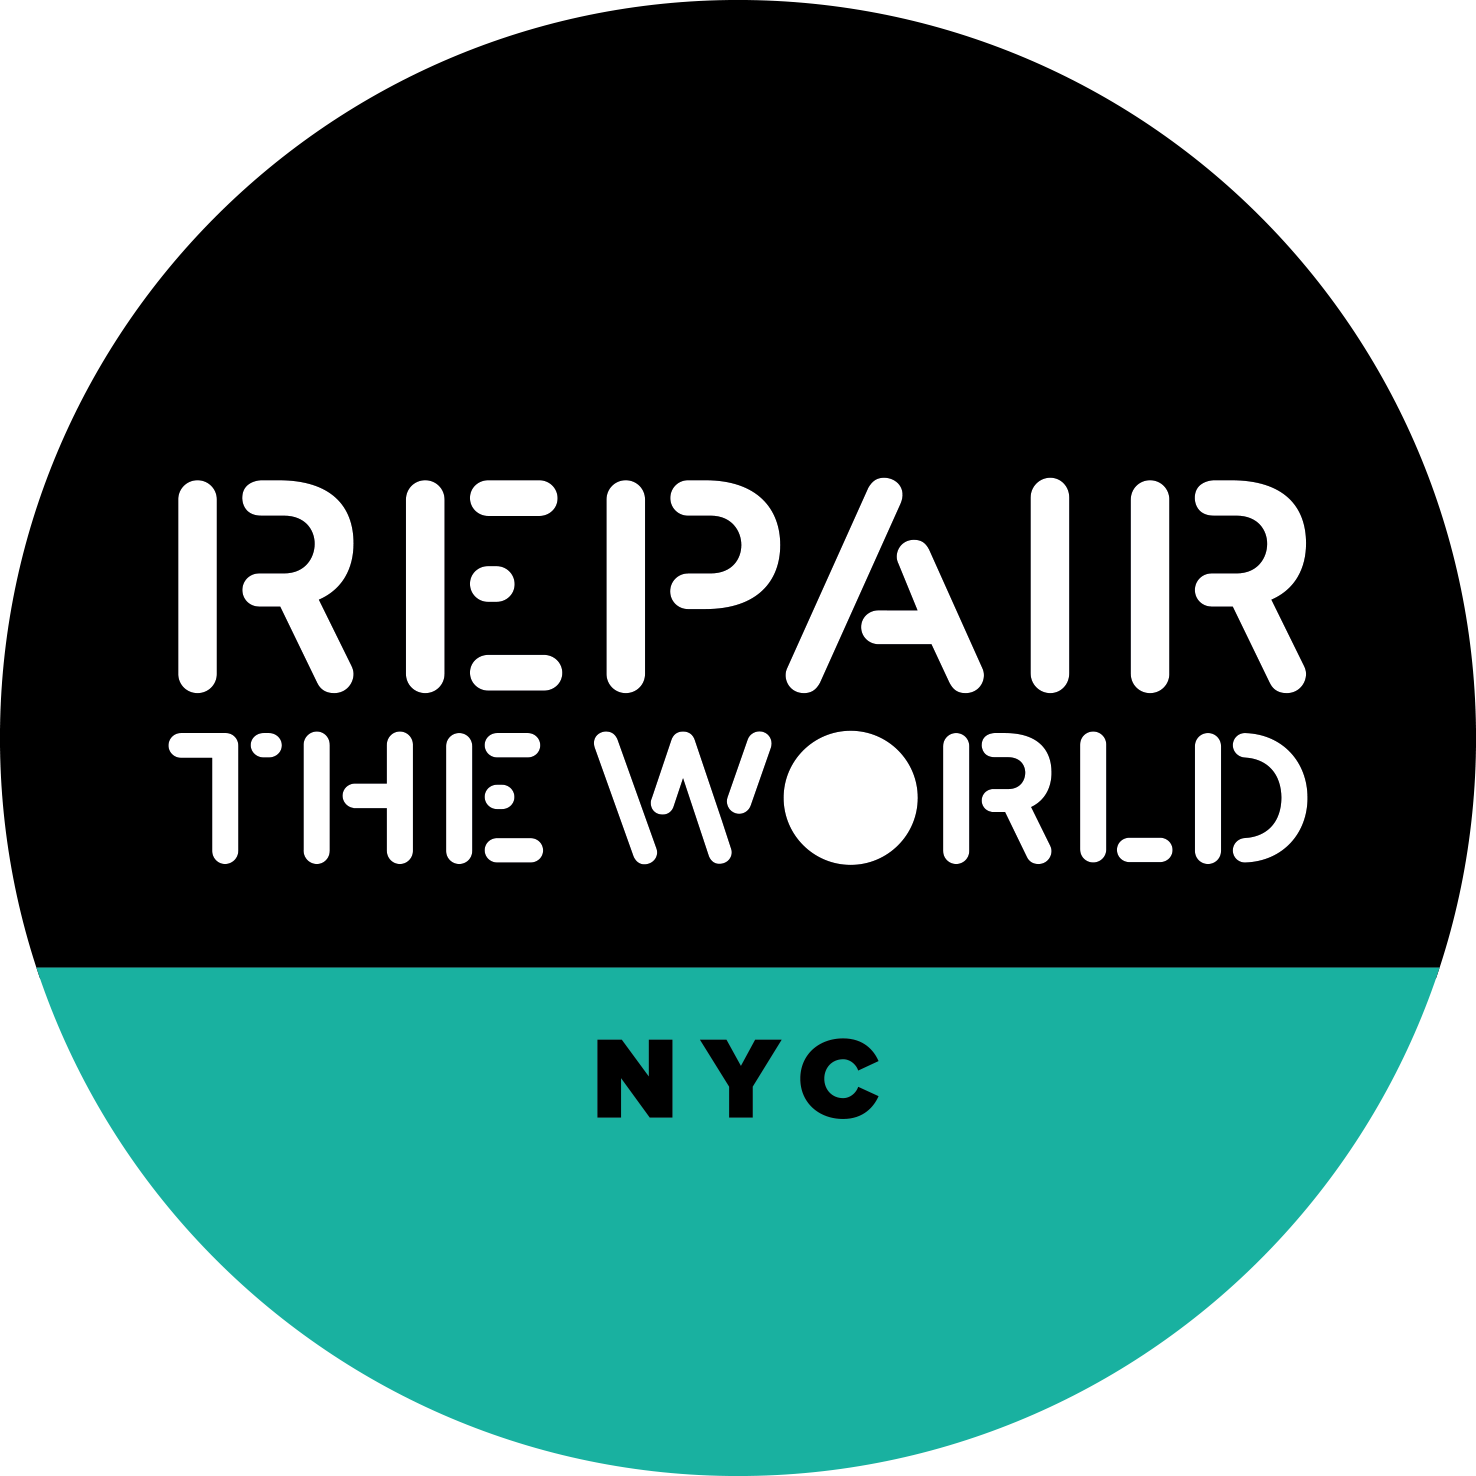 Repair the world NYC Logo.png